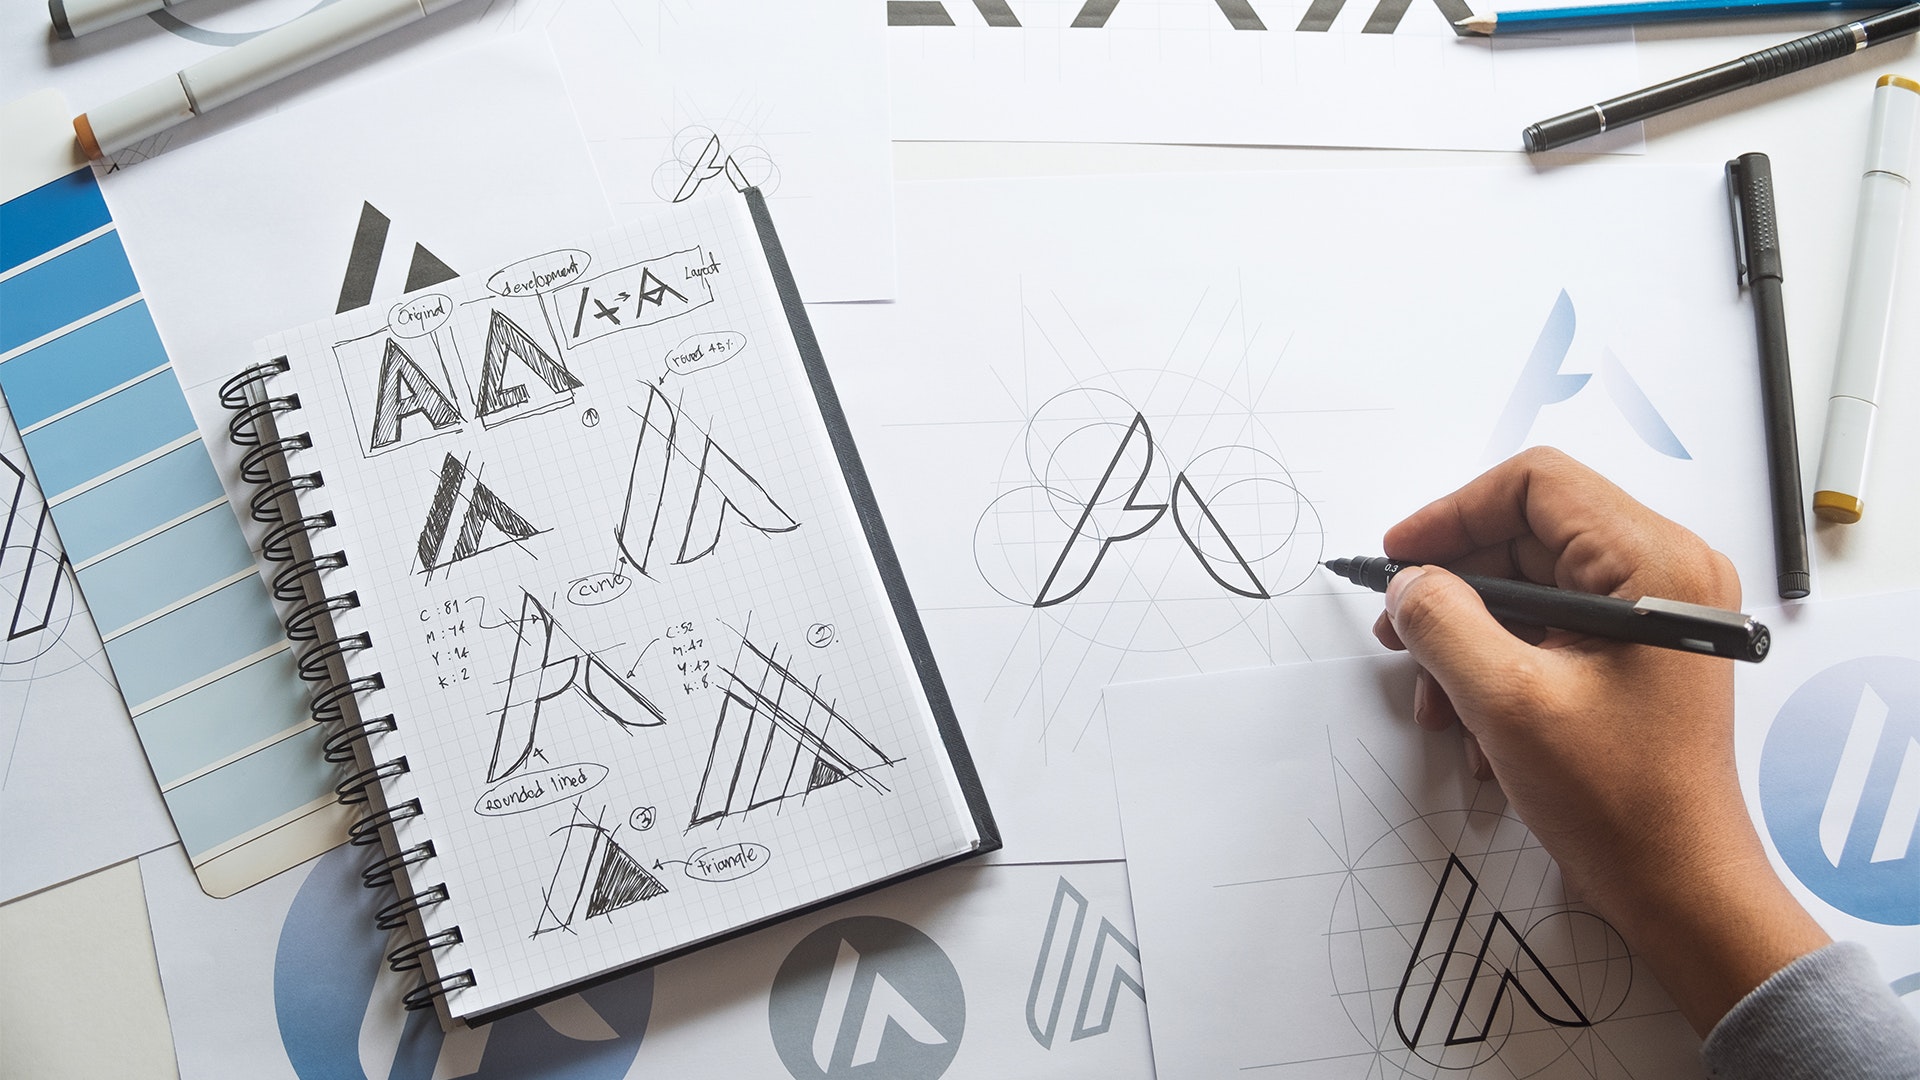 Graphic logo designer sketching ideas in a sketch book